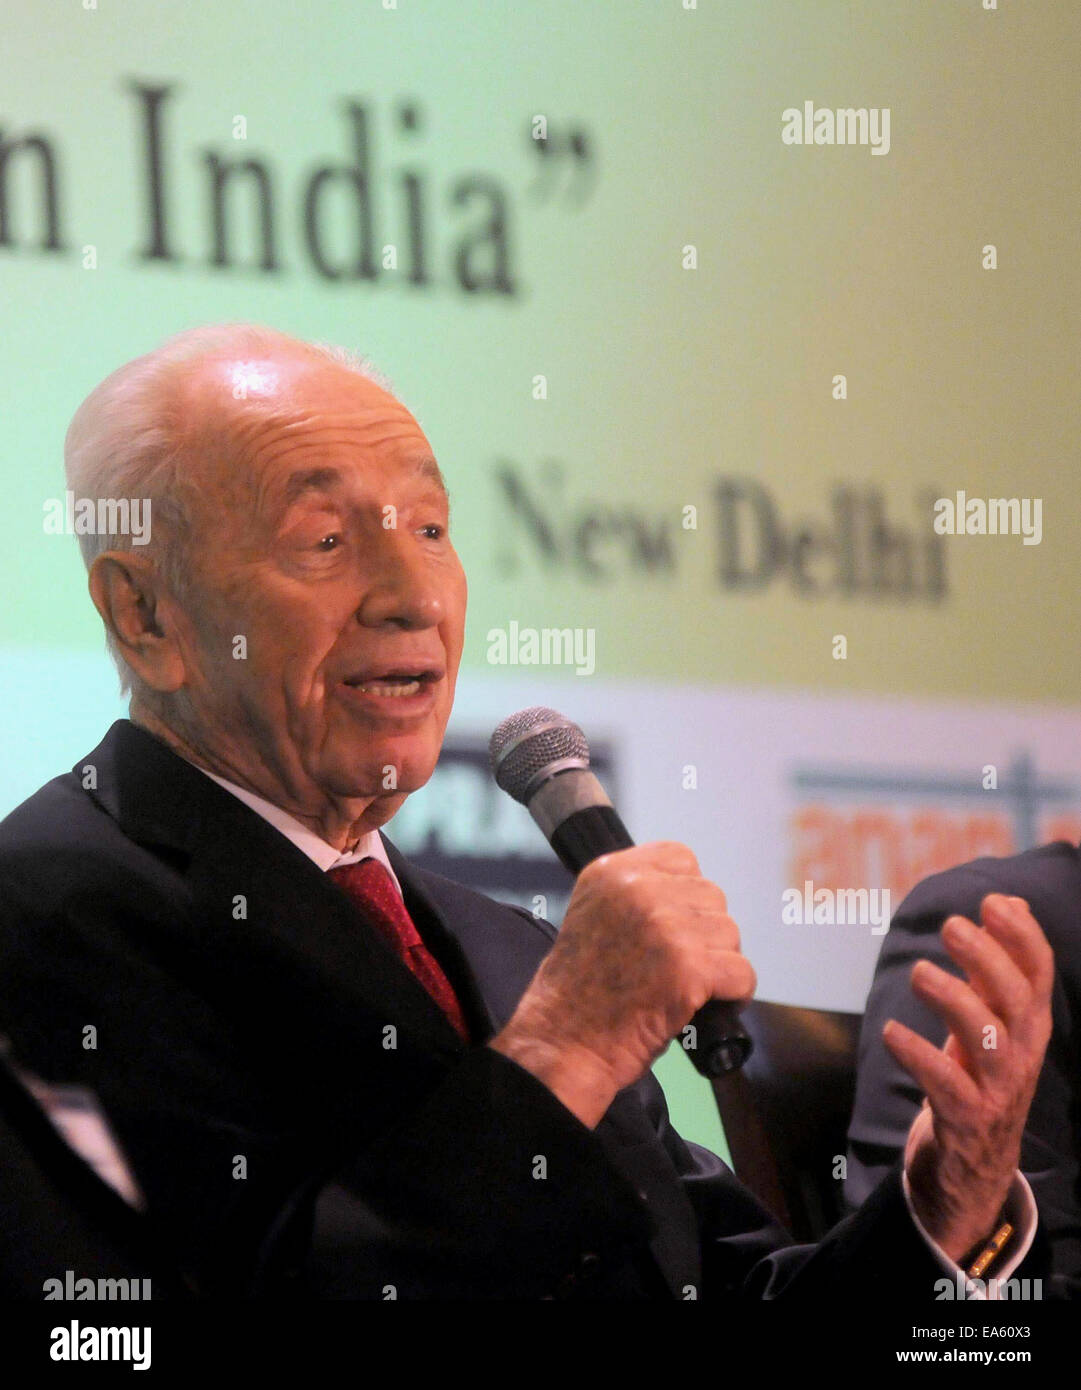 (141107) -- NEW DELHI, Nov. 7, 2014 (Xinhua) -- Former Israeli president Shimon Perez speaks at a seminar on 'Creating a Second Green Revolution in India' in New Delhi, India, Nov. 7, 2014.   (Xinhua/Partha Sarkar) Stock Photo